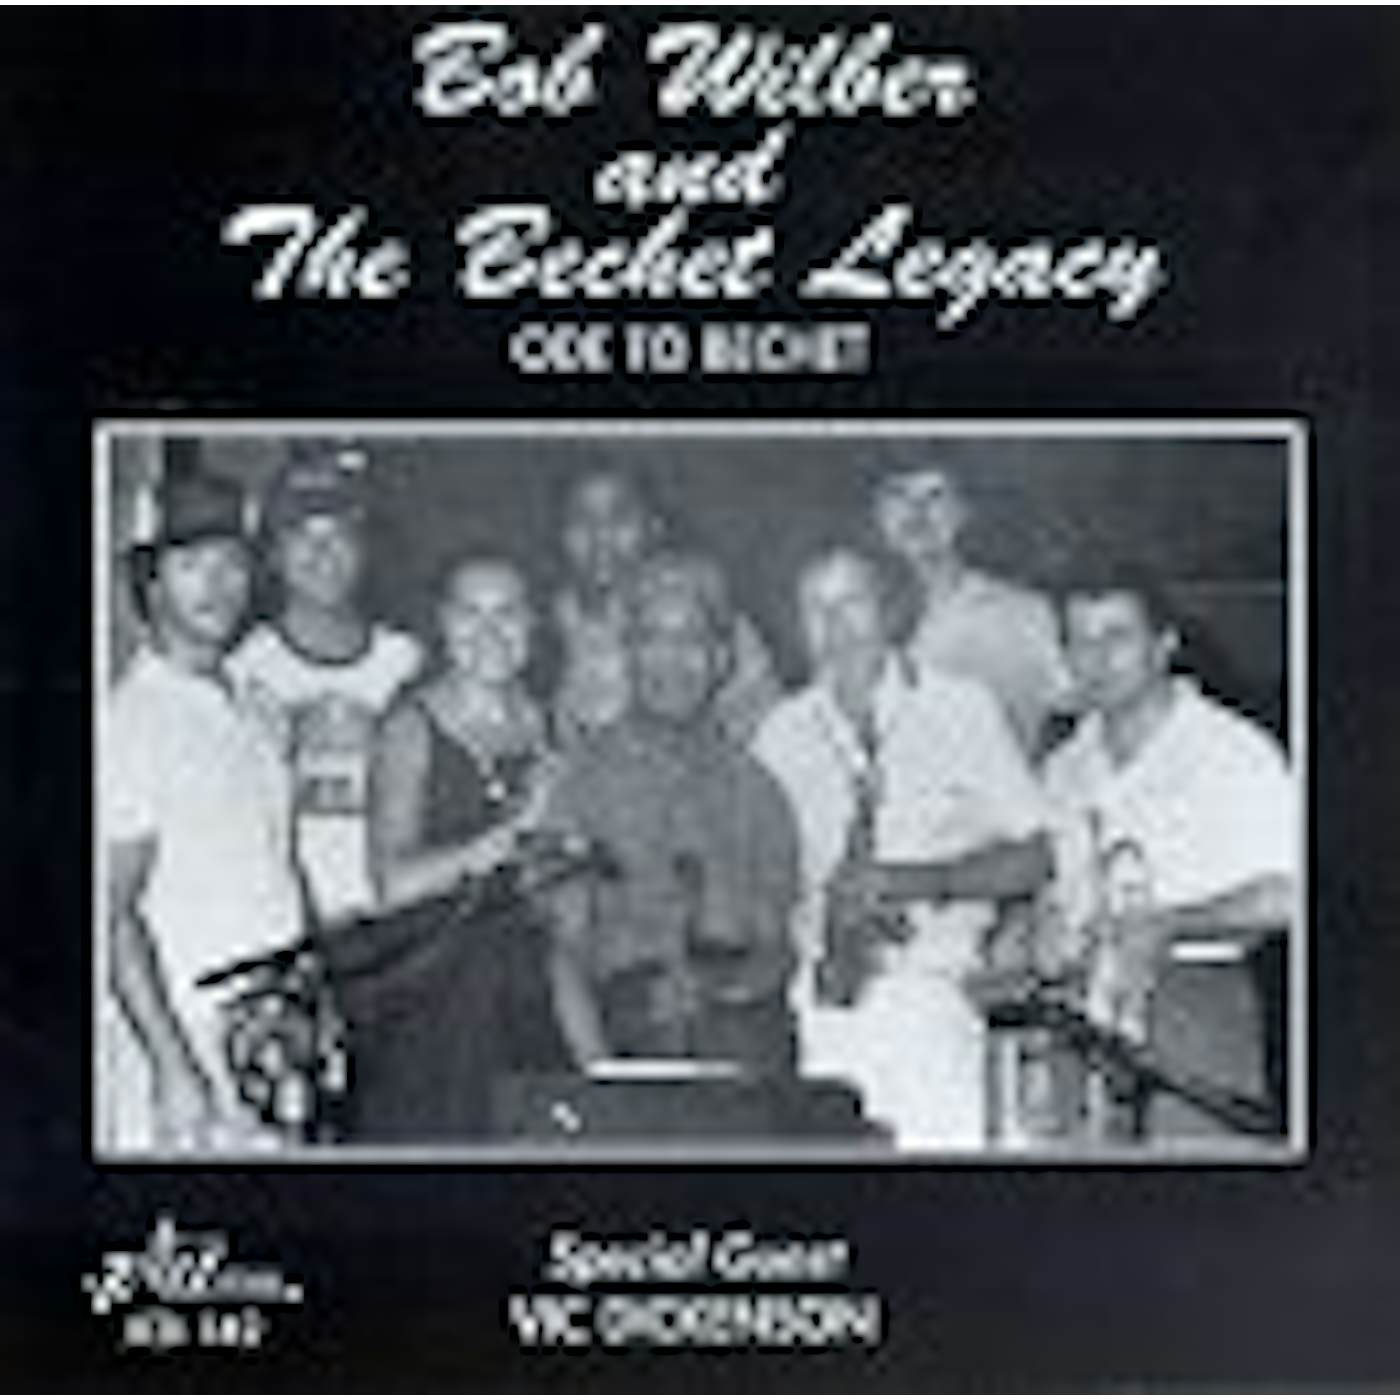 Bob Wilber ODE TO BECHET CD